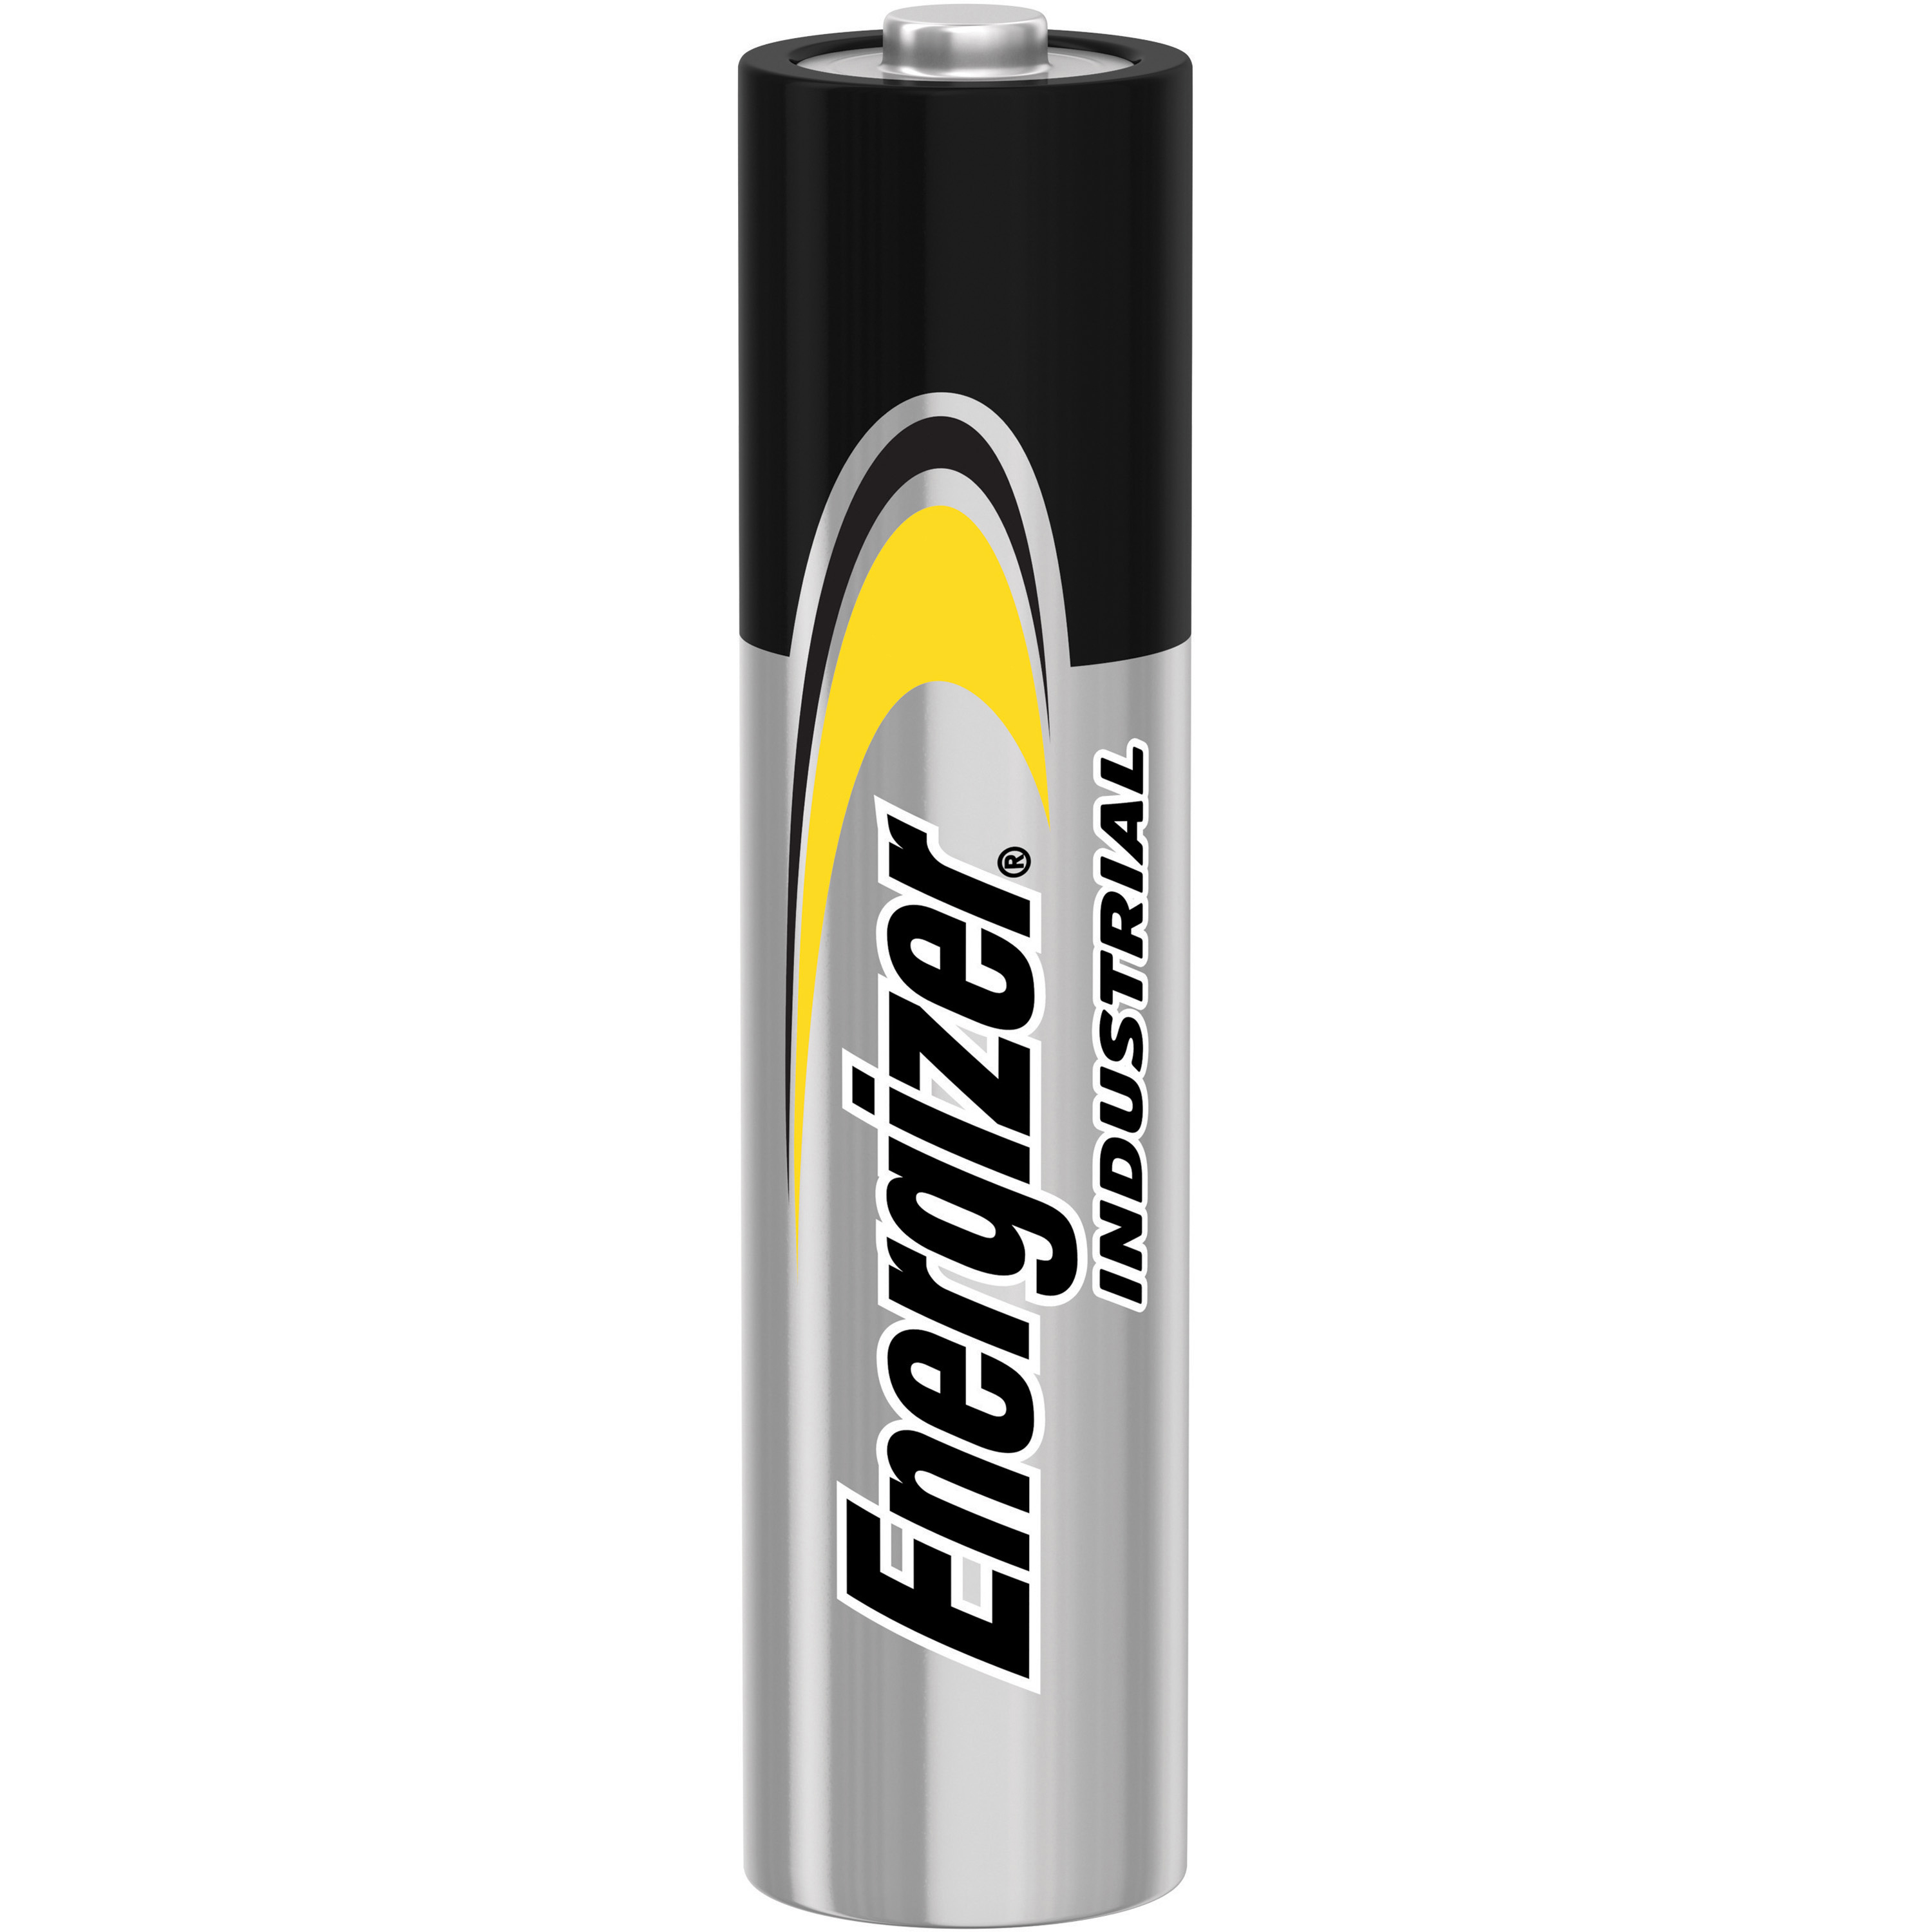 Energizer Industrial Alkaline AAA Batteries, 24 pack